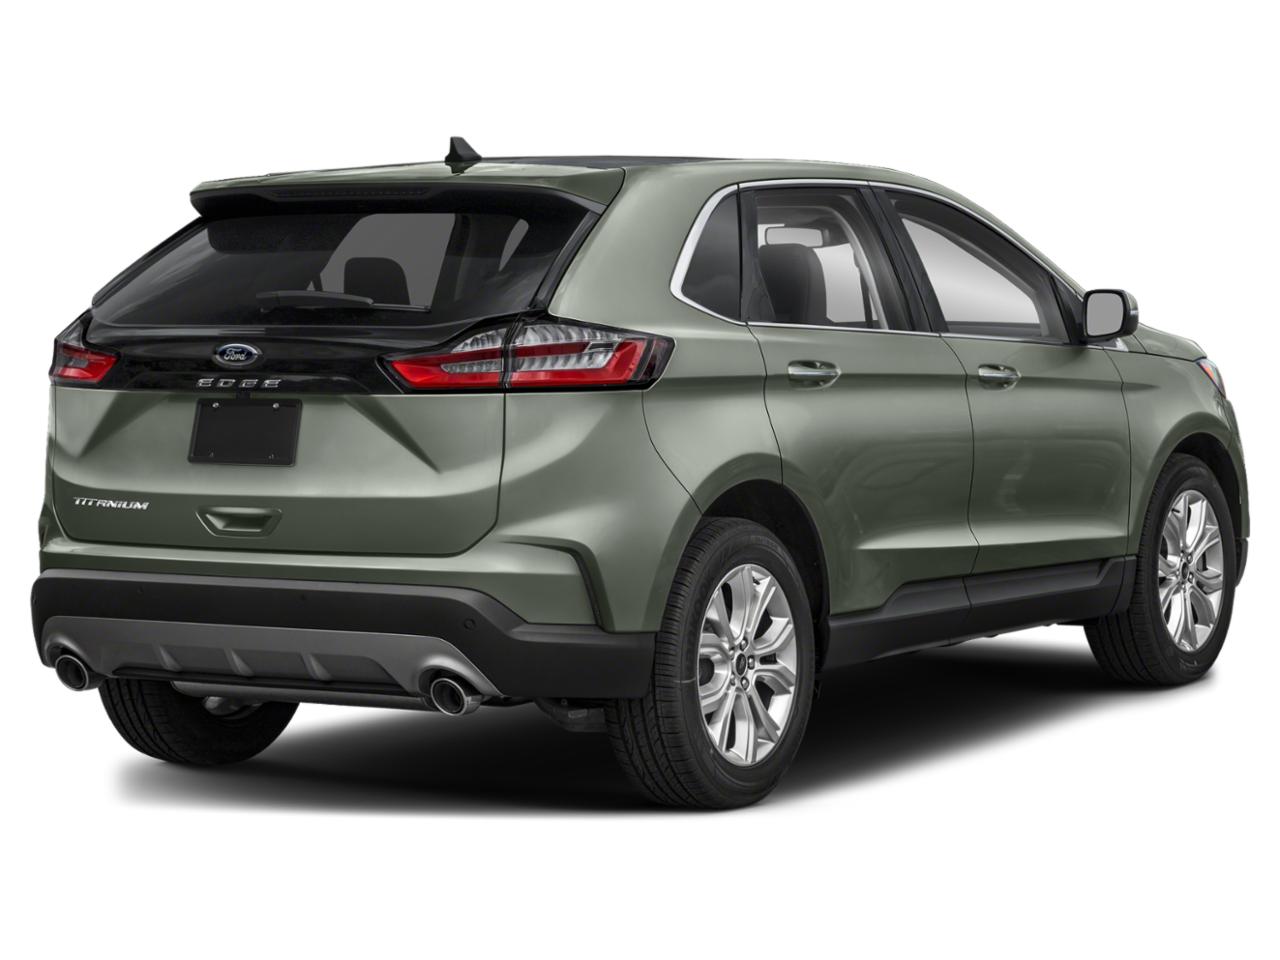 New 2024 Green Ford Titanium Edge for Sale South of Portland, Oregon